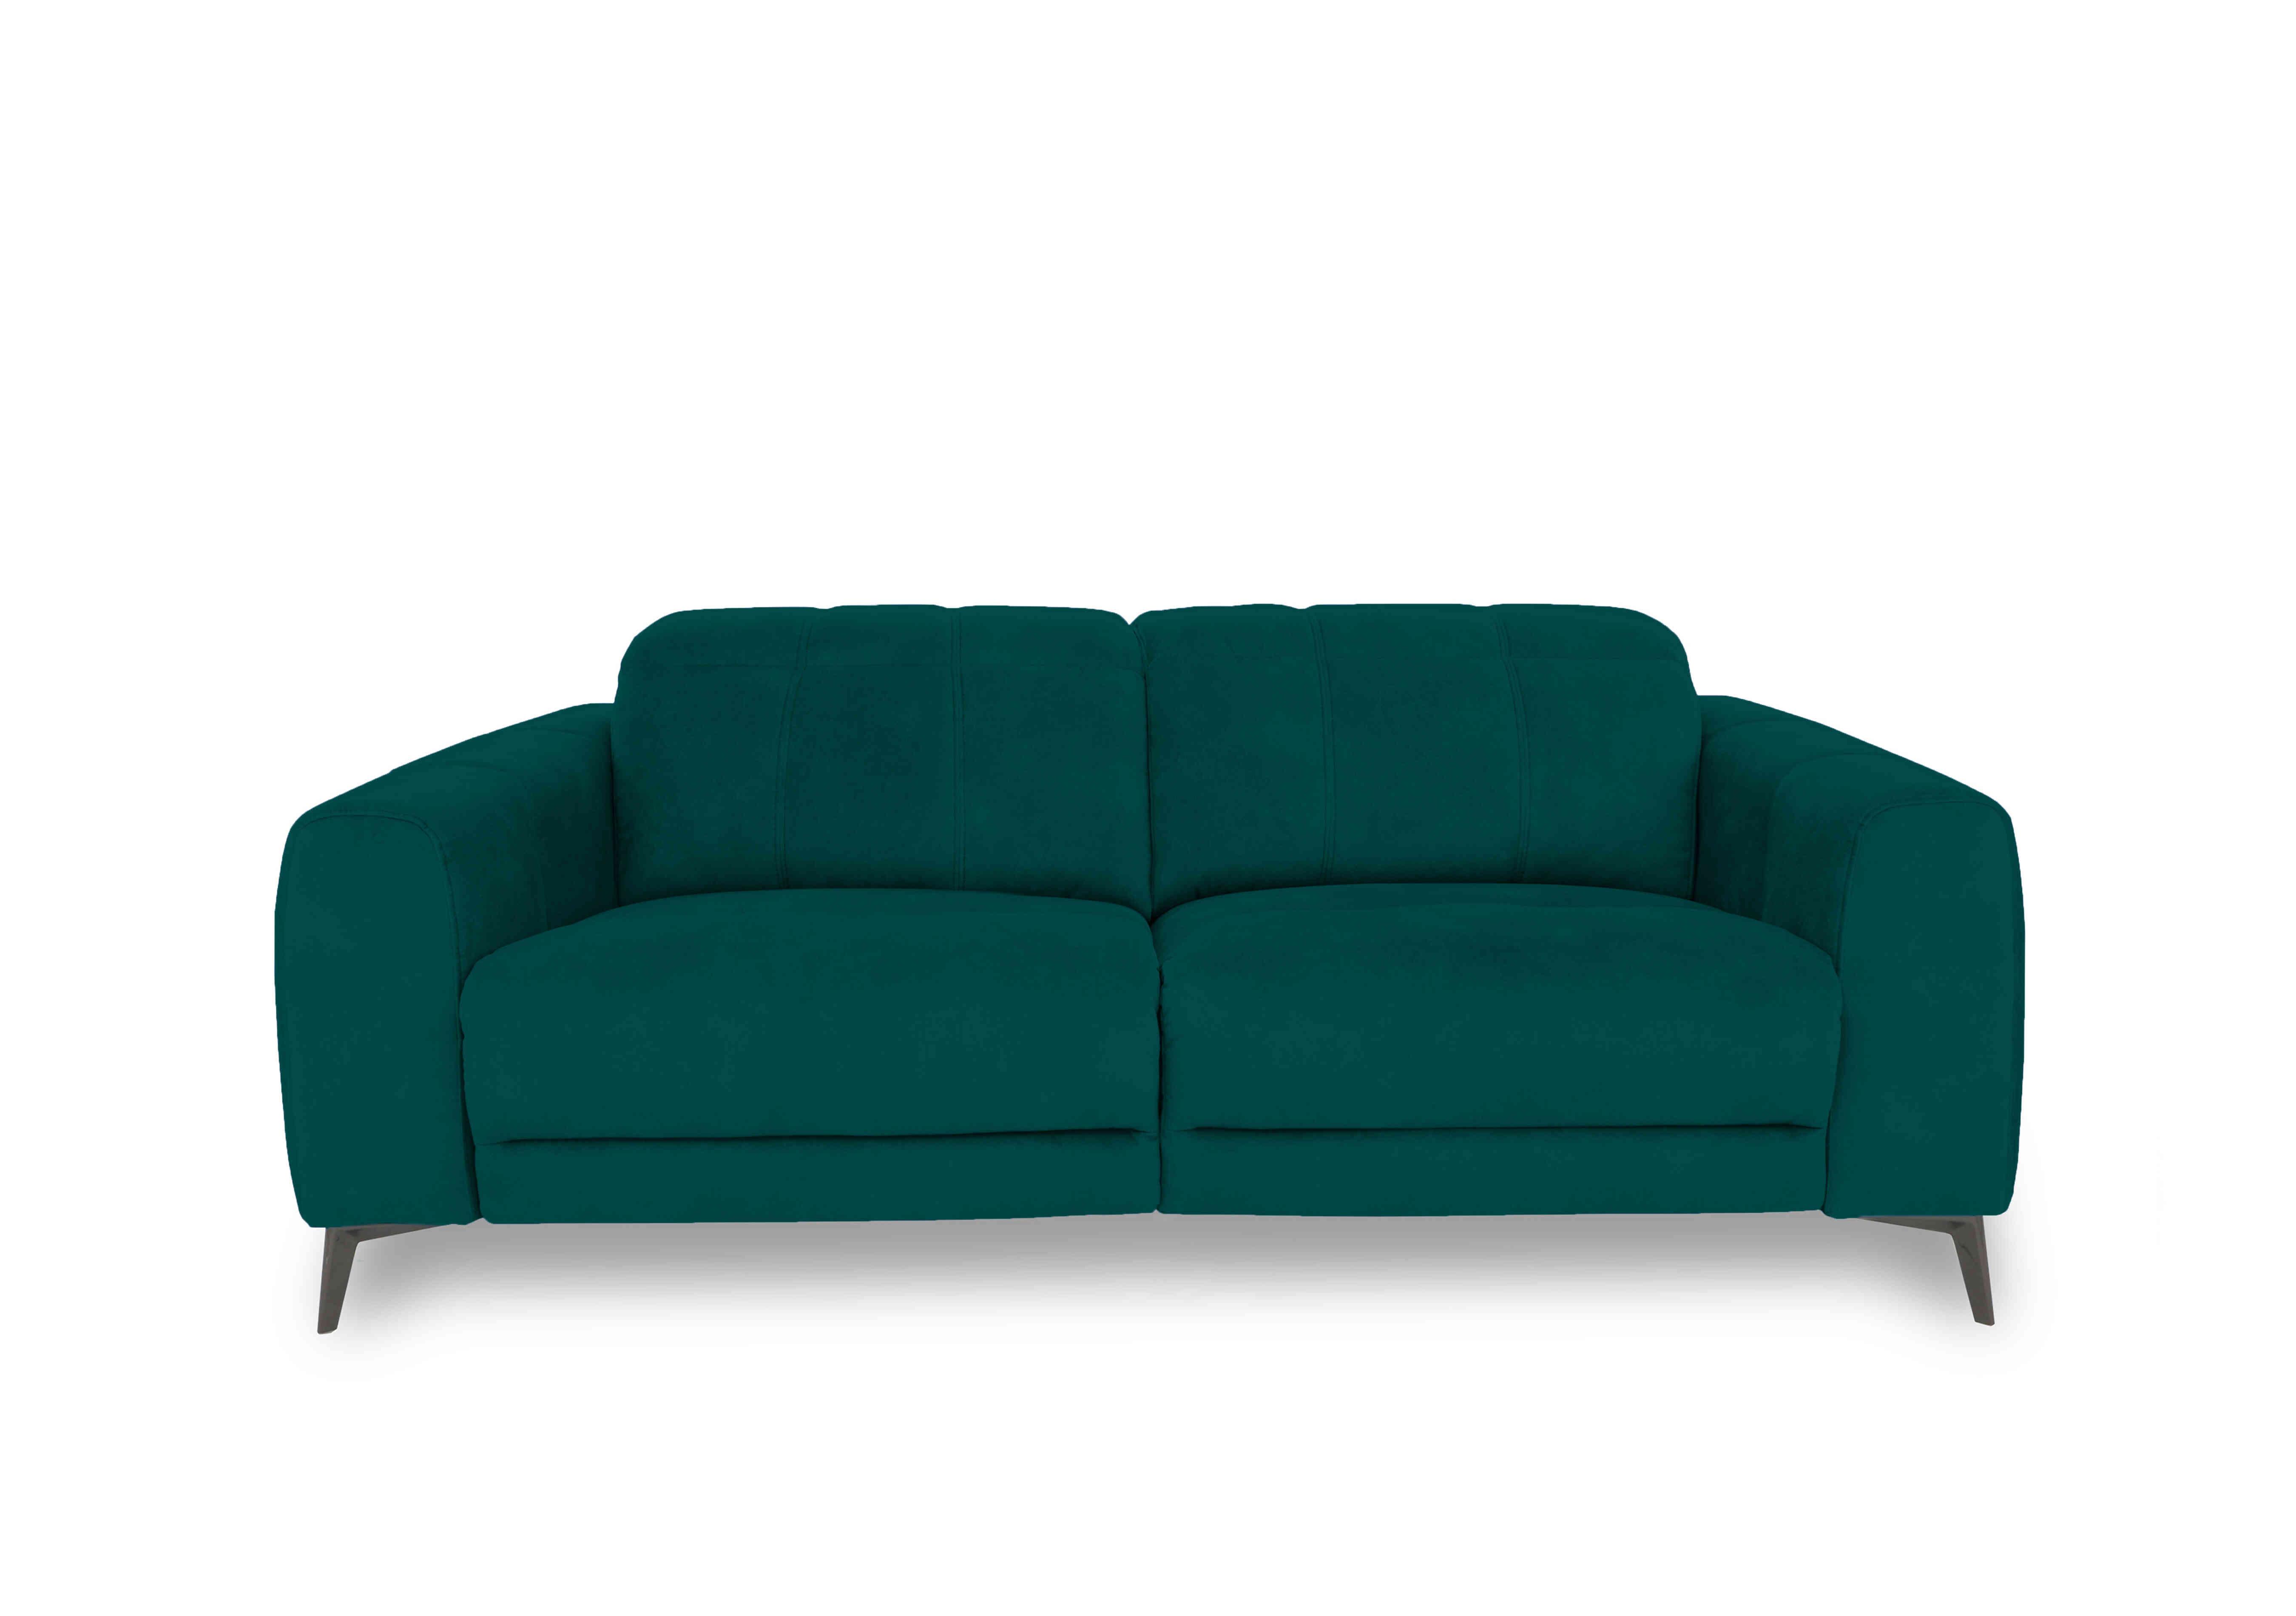 Ezra 3 Seater Fabric Sofa in Opulence 51003 Teal on Furniture Village